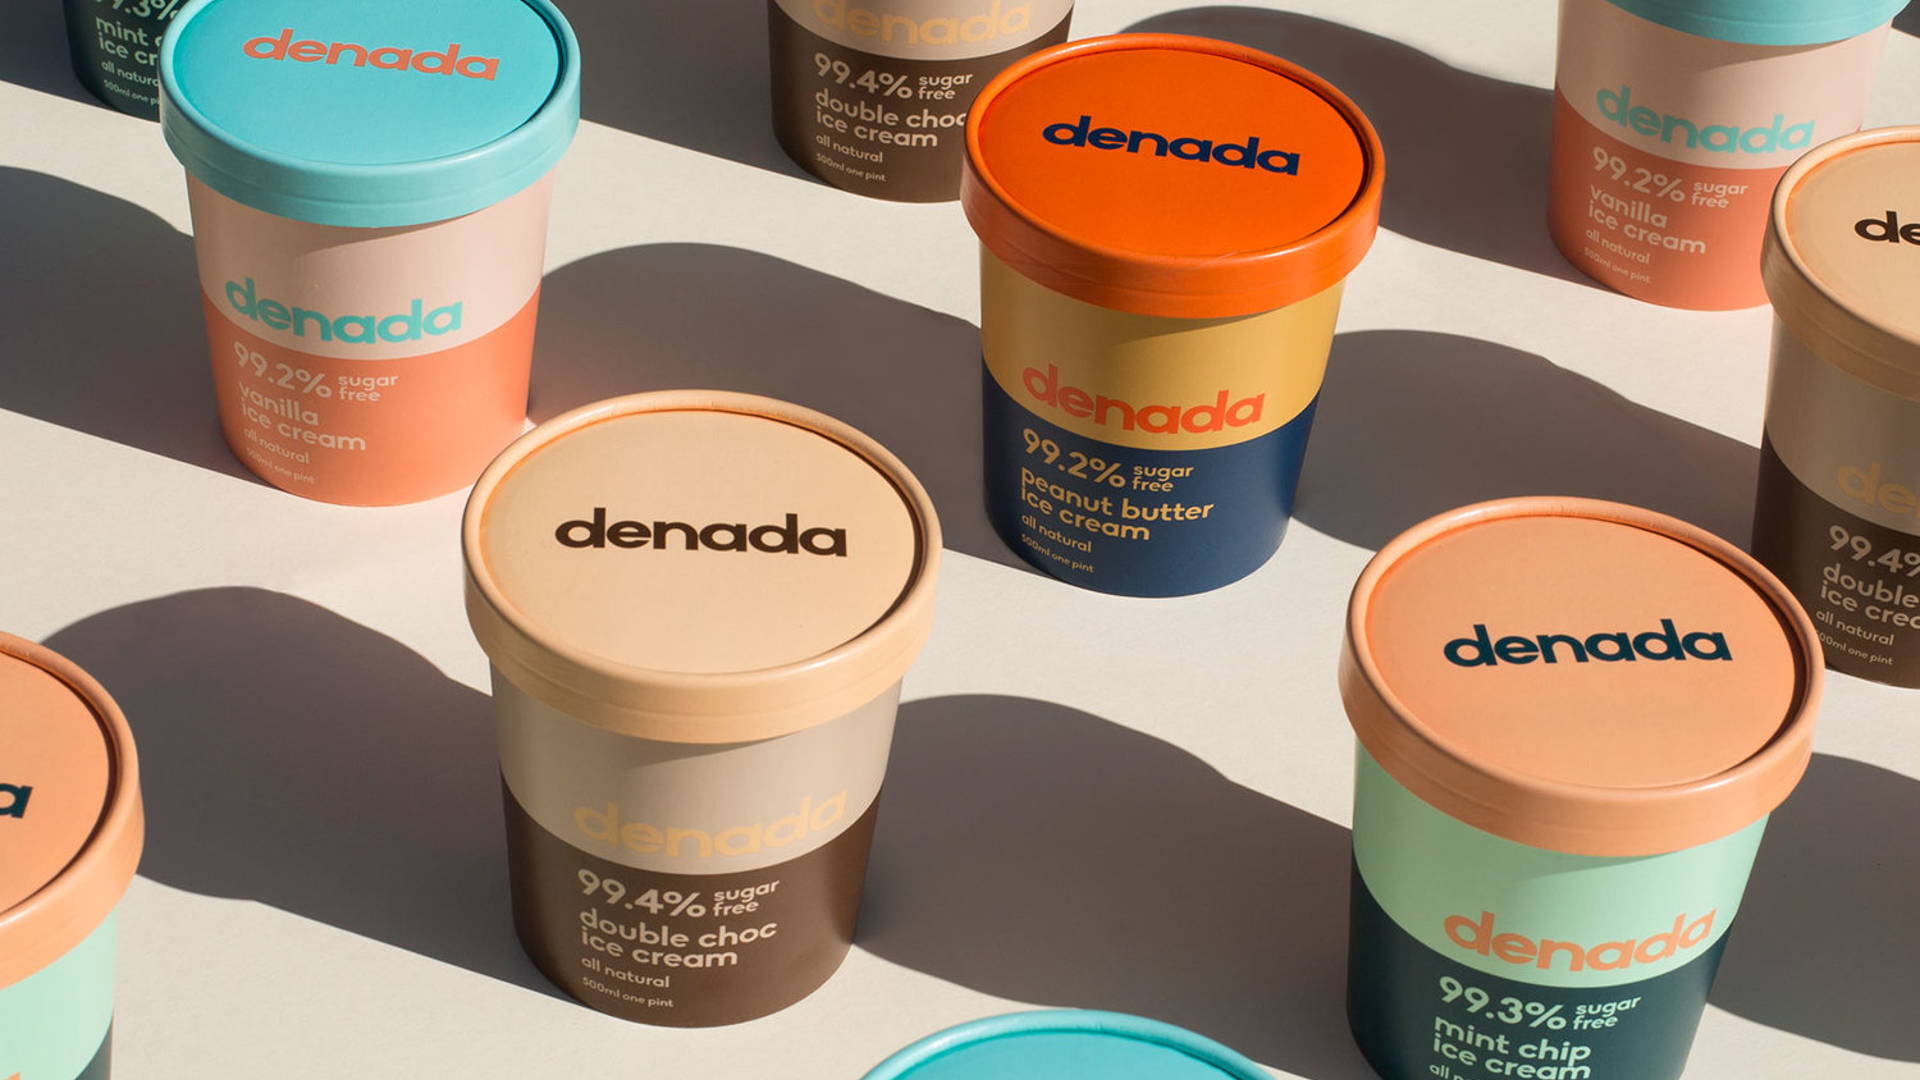 Featured image for Denada Makes Sugar-Free Ice Cream Look Irresistible